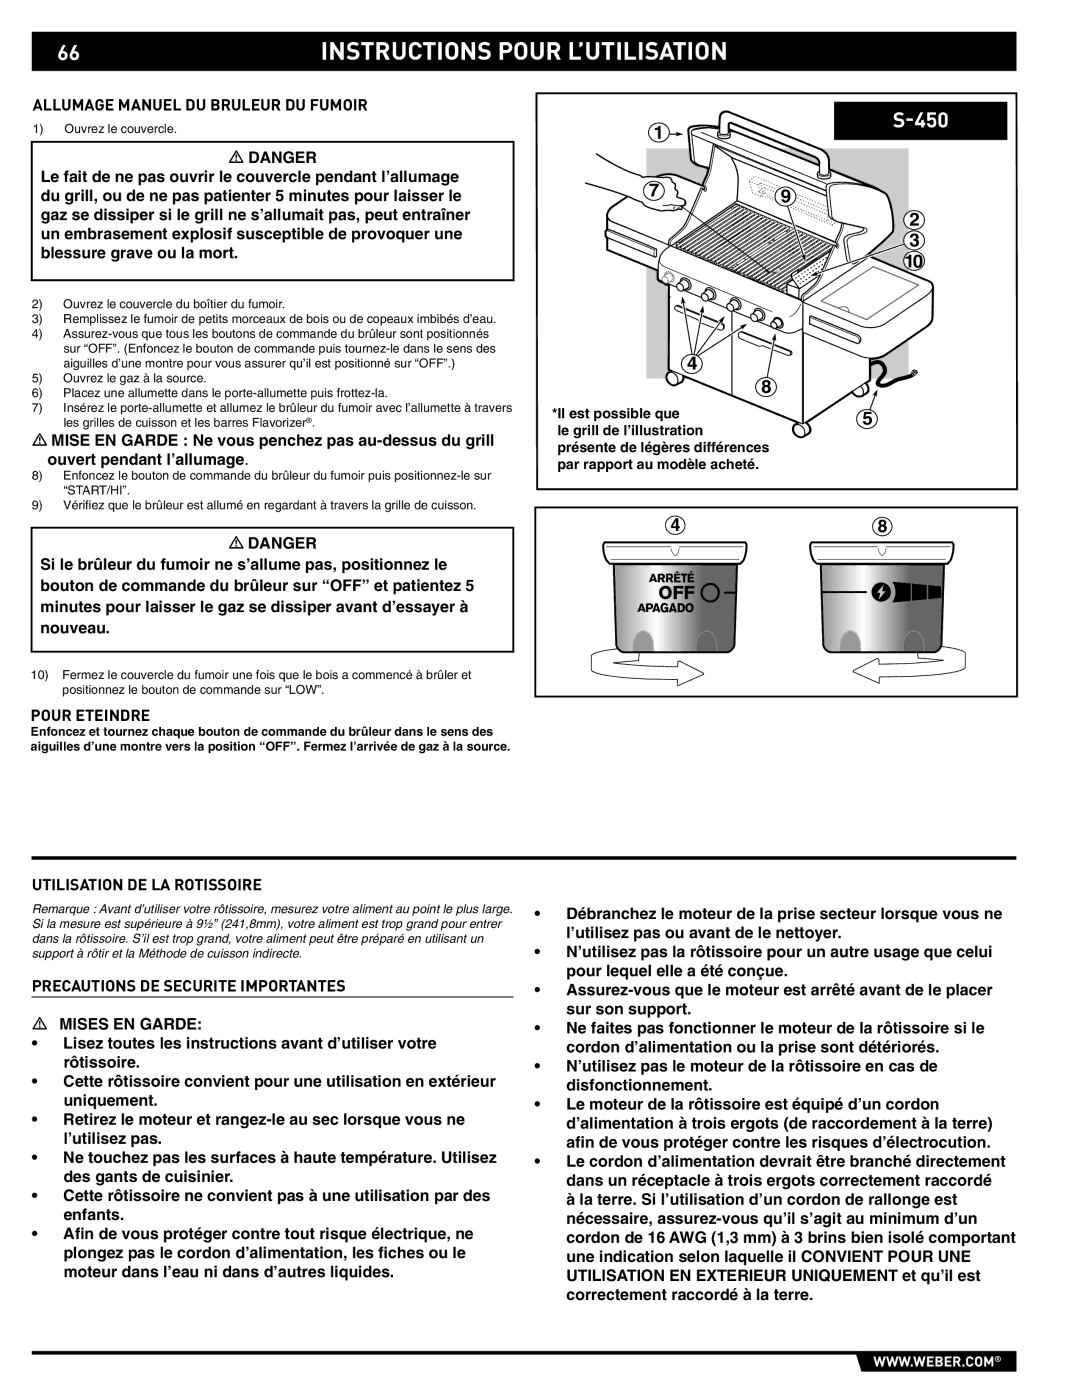 Weber 89561 manual Allumage Manuel DU Bruleur DU Fumoir, Utilisation DE LA Rotissoire, Precautions DE Securite Importantes 